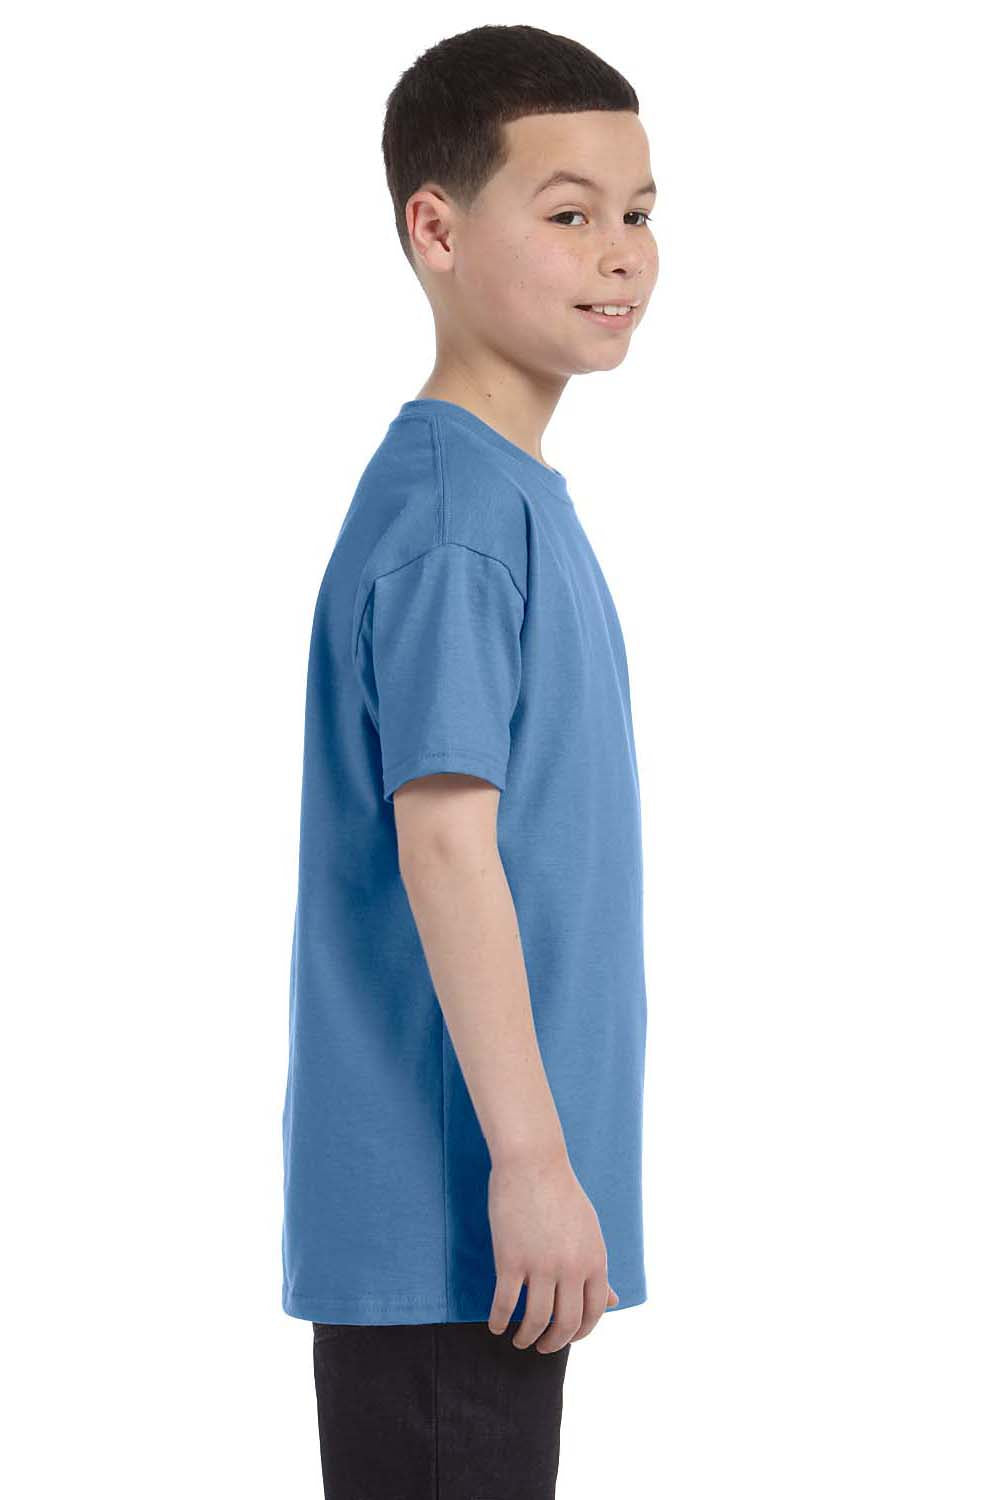 Hanes 54500 Youth ComfortSoft Short Sleeve Crewneck T-Shirt Carolina Blue Side